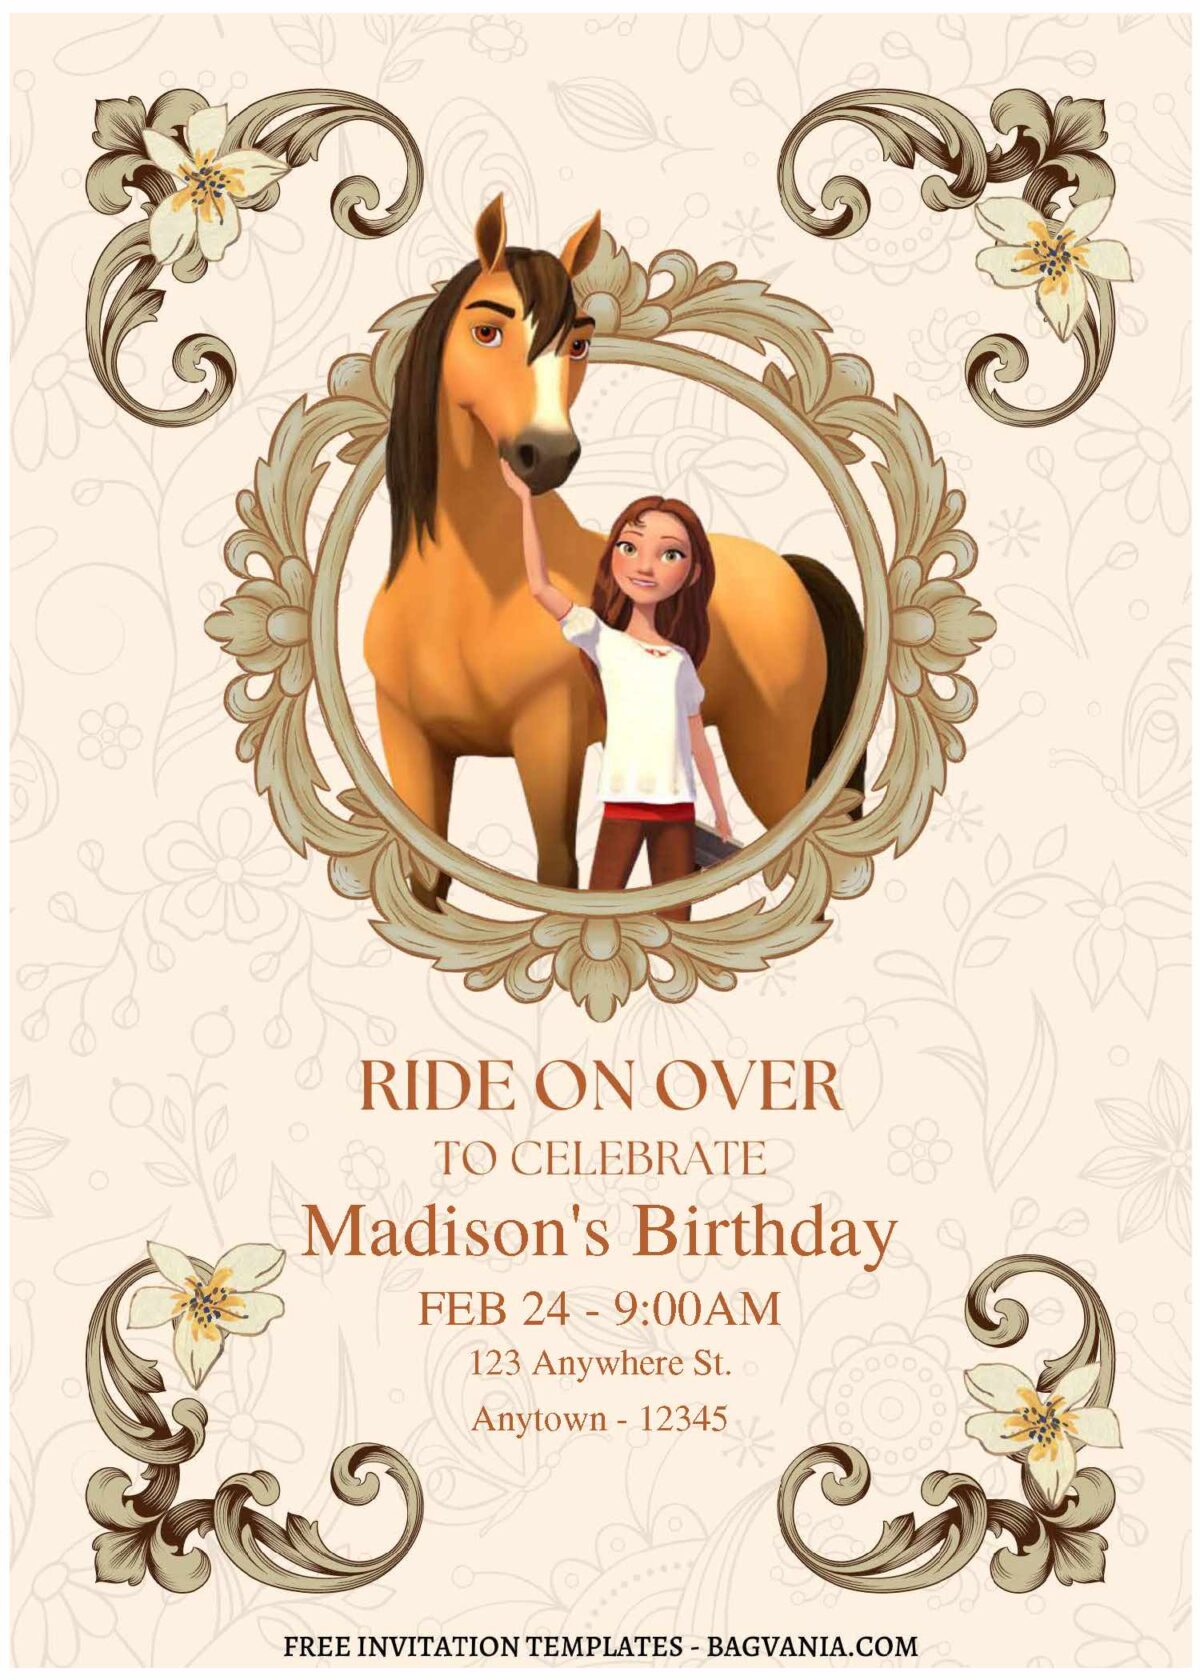 (Free Editable PDF) Delightful Spirit Riding Birthday Invitation Templates B